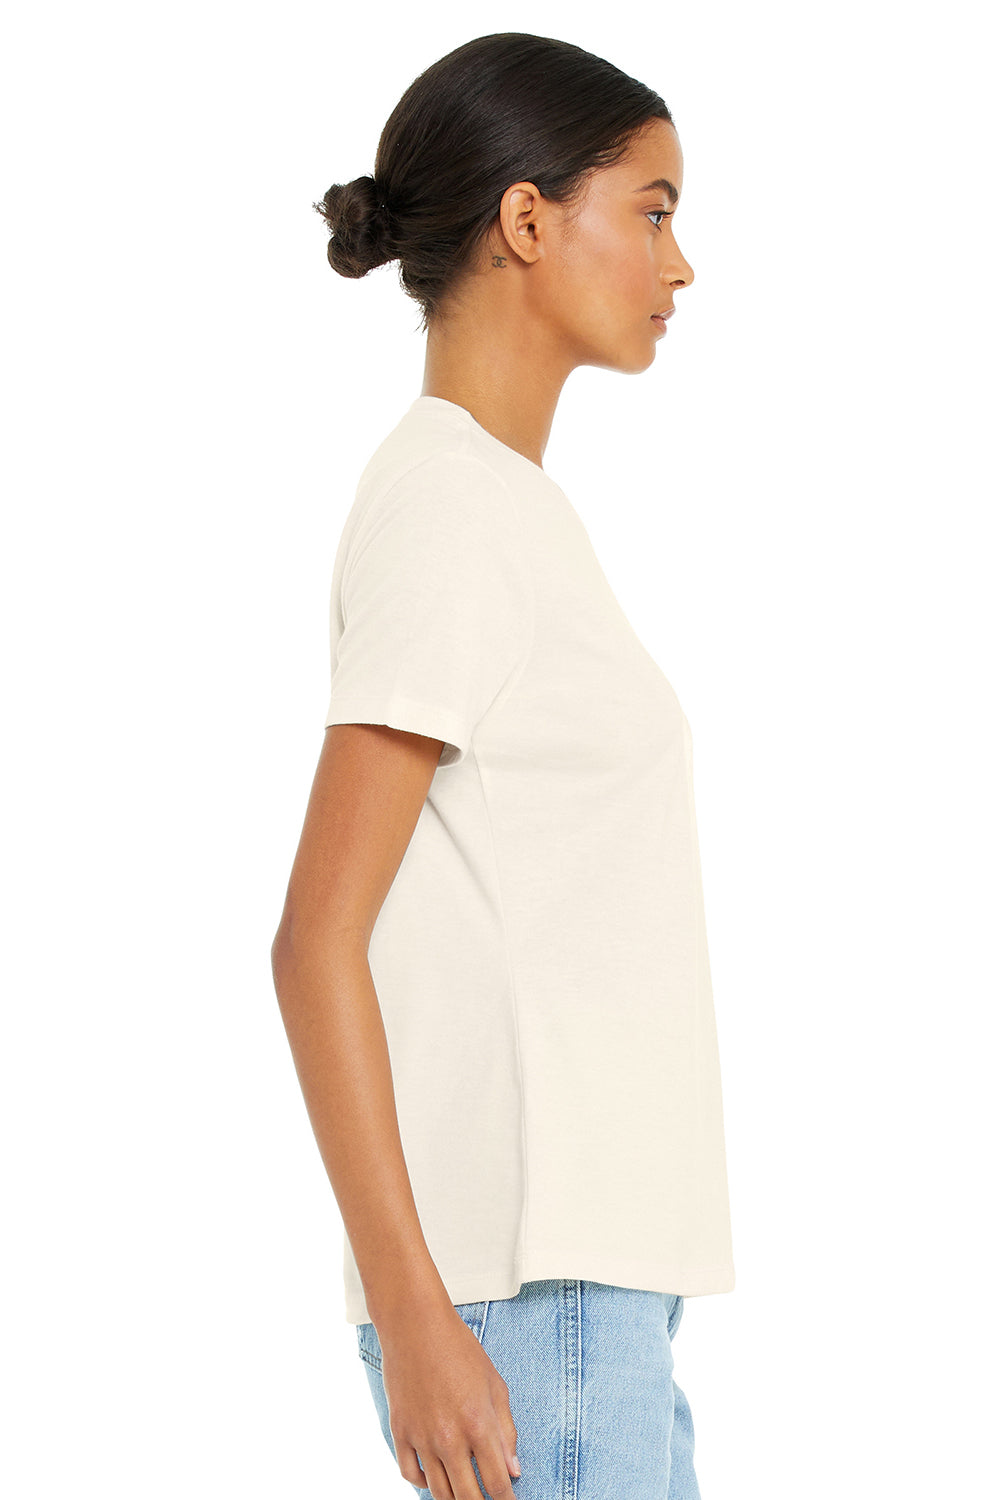 Bella + Canvas BC6400CVC/6400CVC Womens CVC Short Sleeve Crewneck T-Shirt Heather Natural Model Side